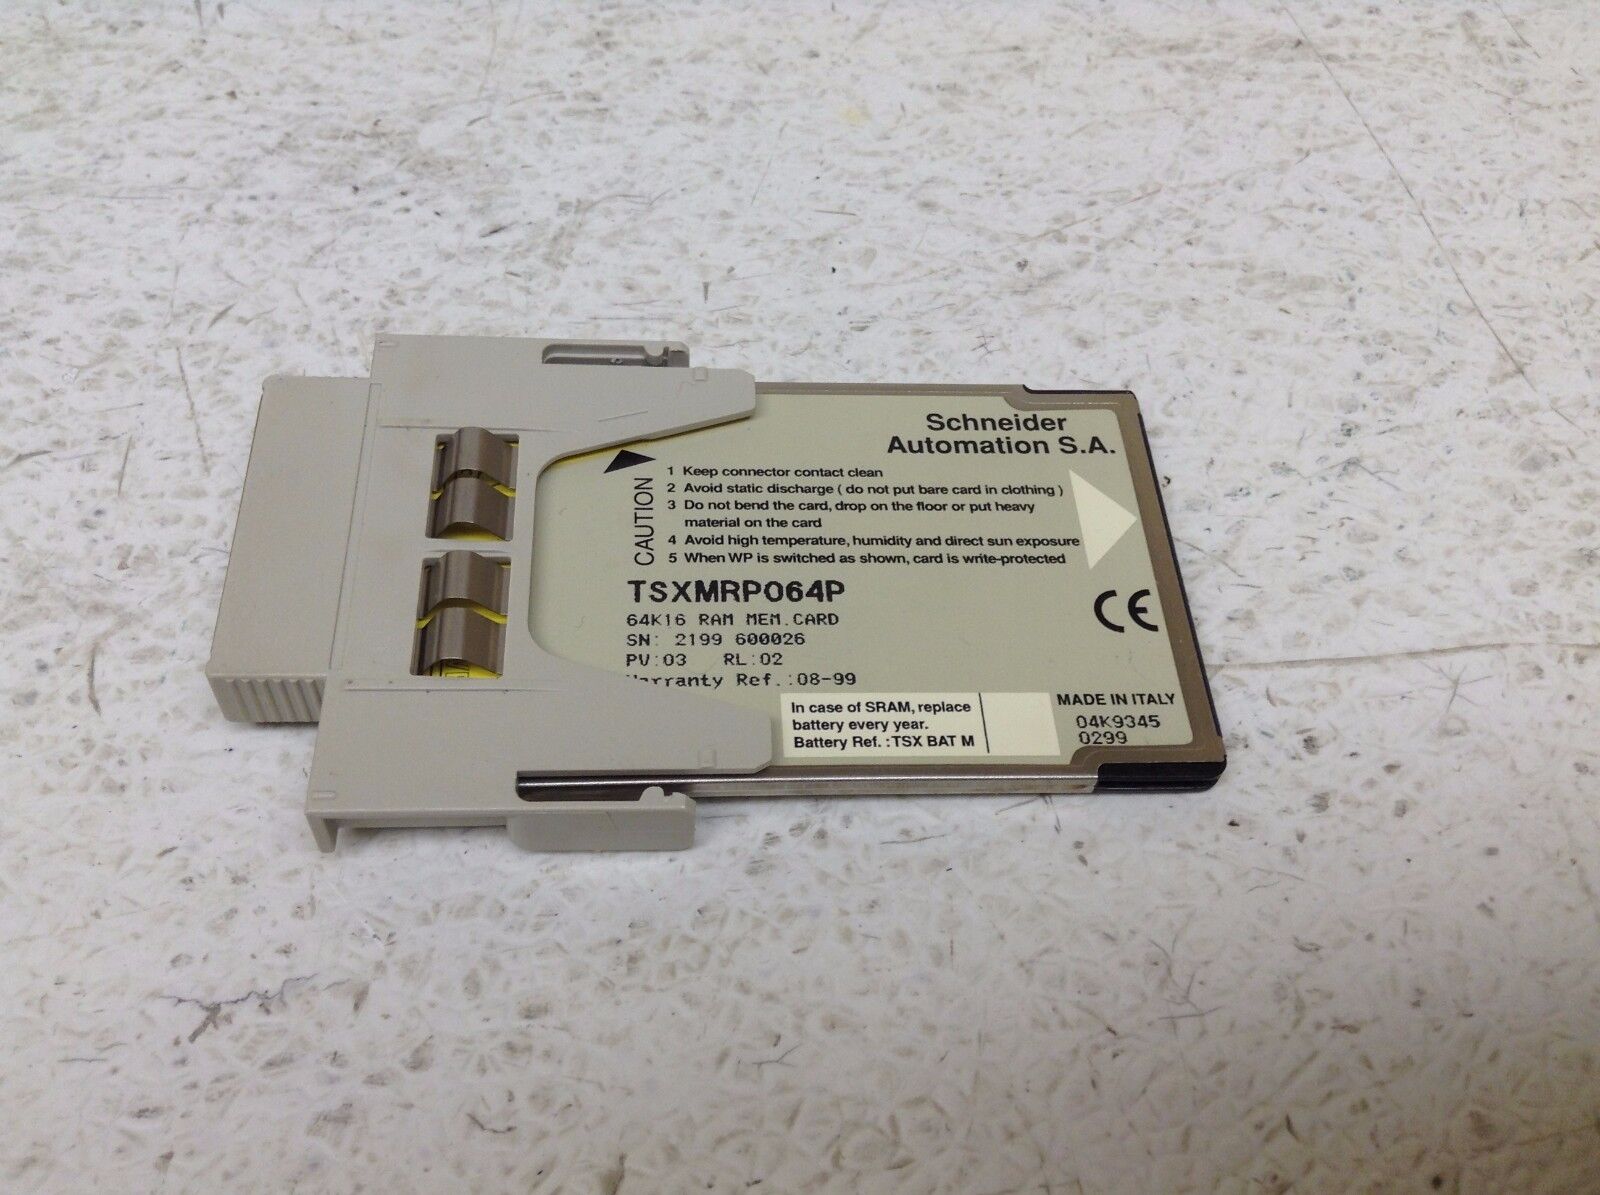 Schneider Modicon TSXMRP064P 64K16 Ram Memory Card TSX MRP064P TSX MRP 064P